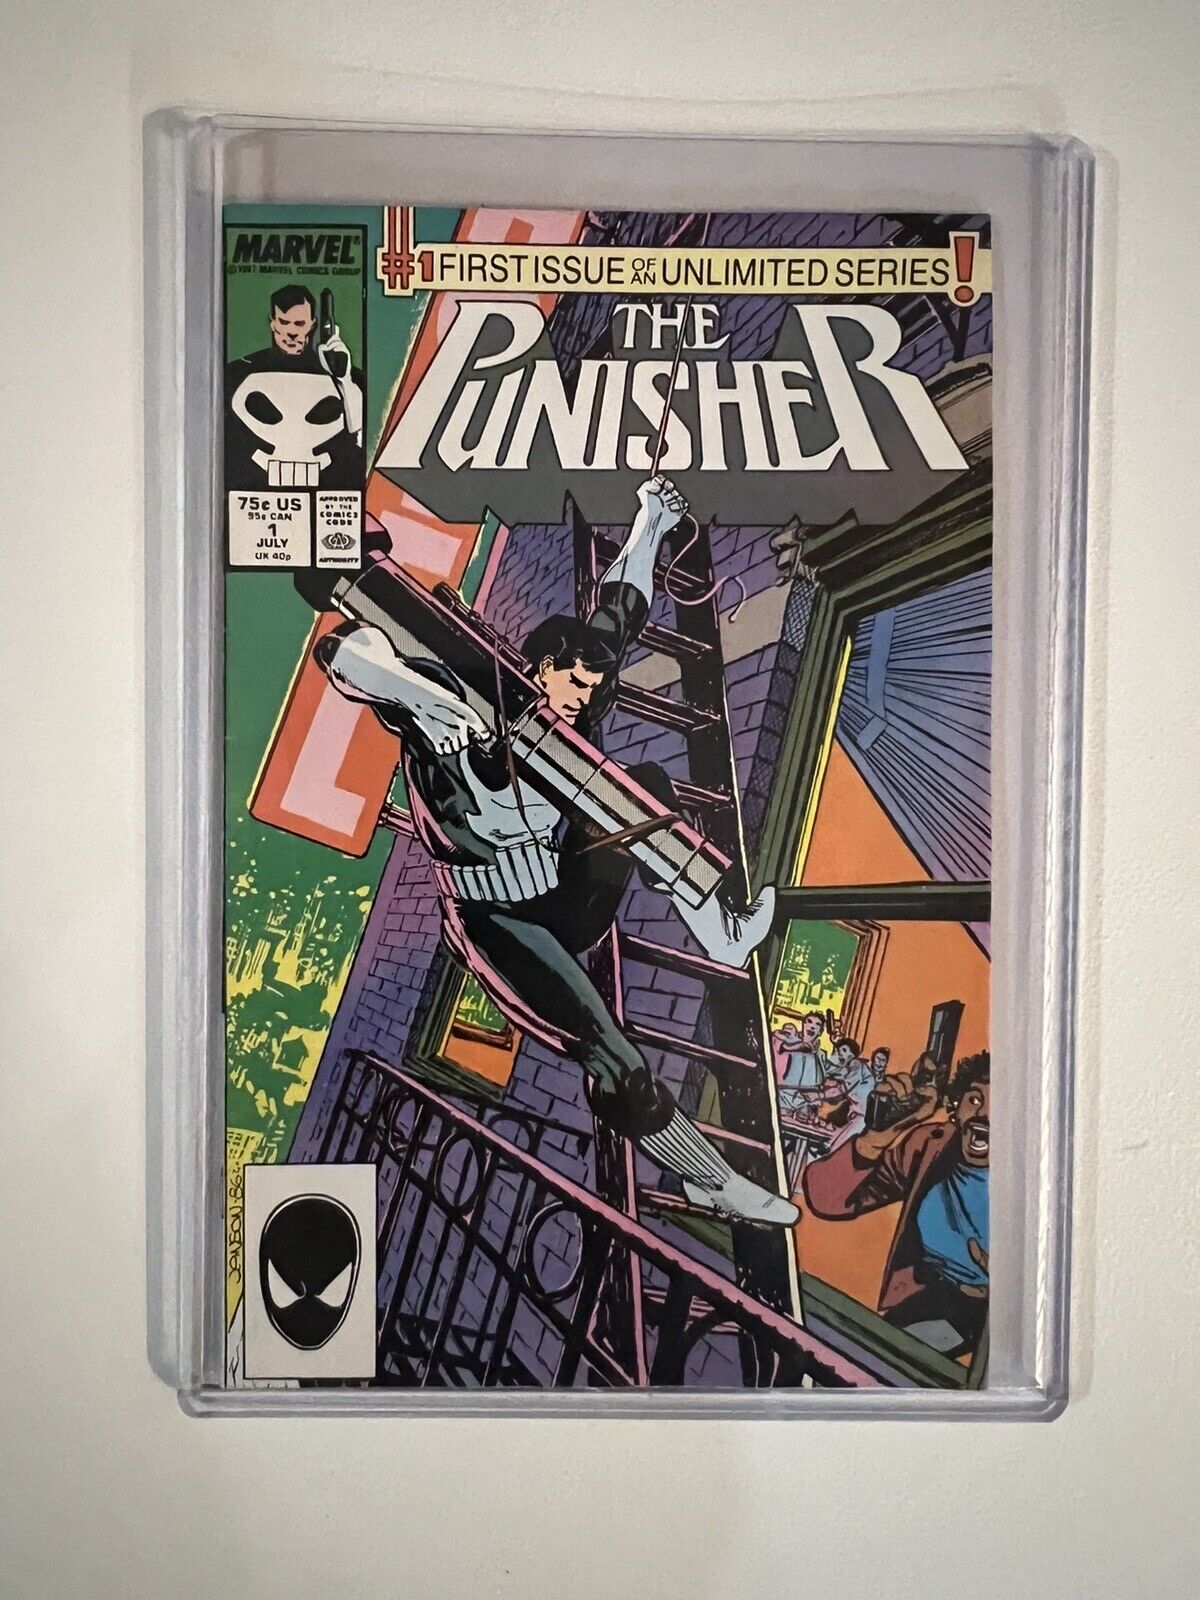 The Punisher #1 - Marvel Comics 1987 - Klaus Janson Artwork - NM, Original Owner